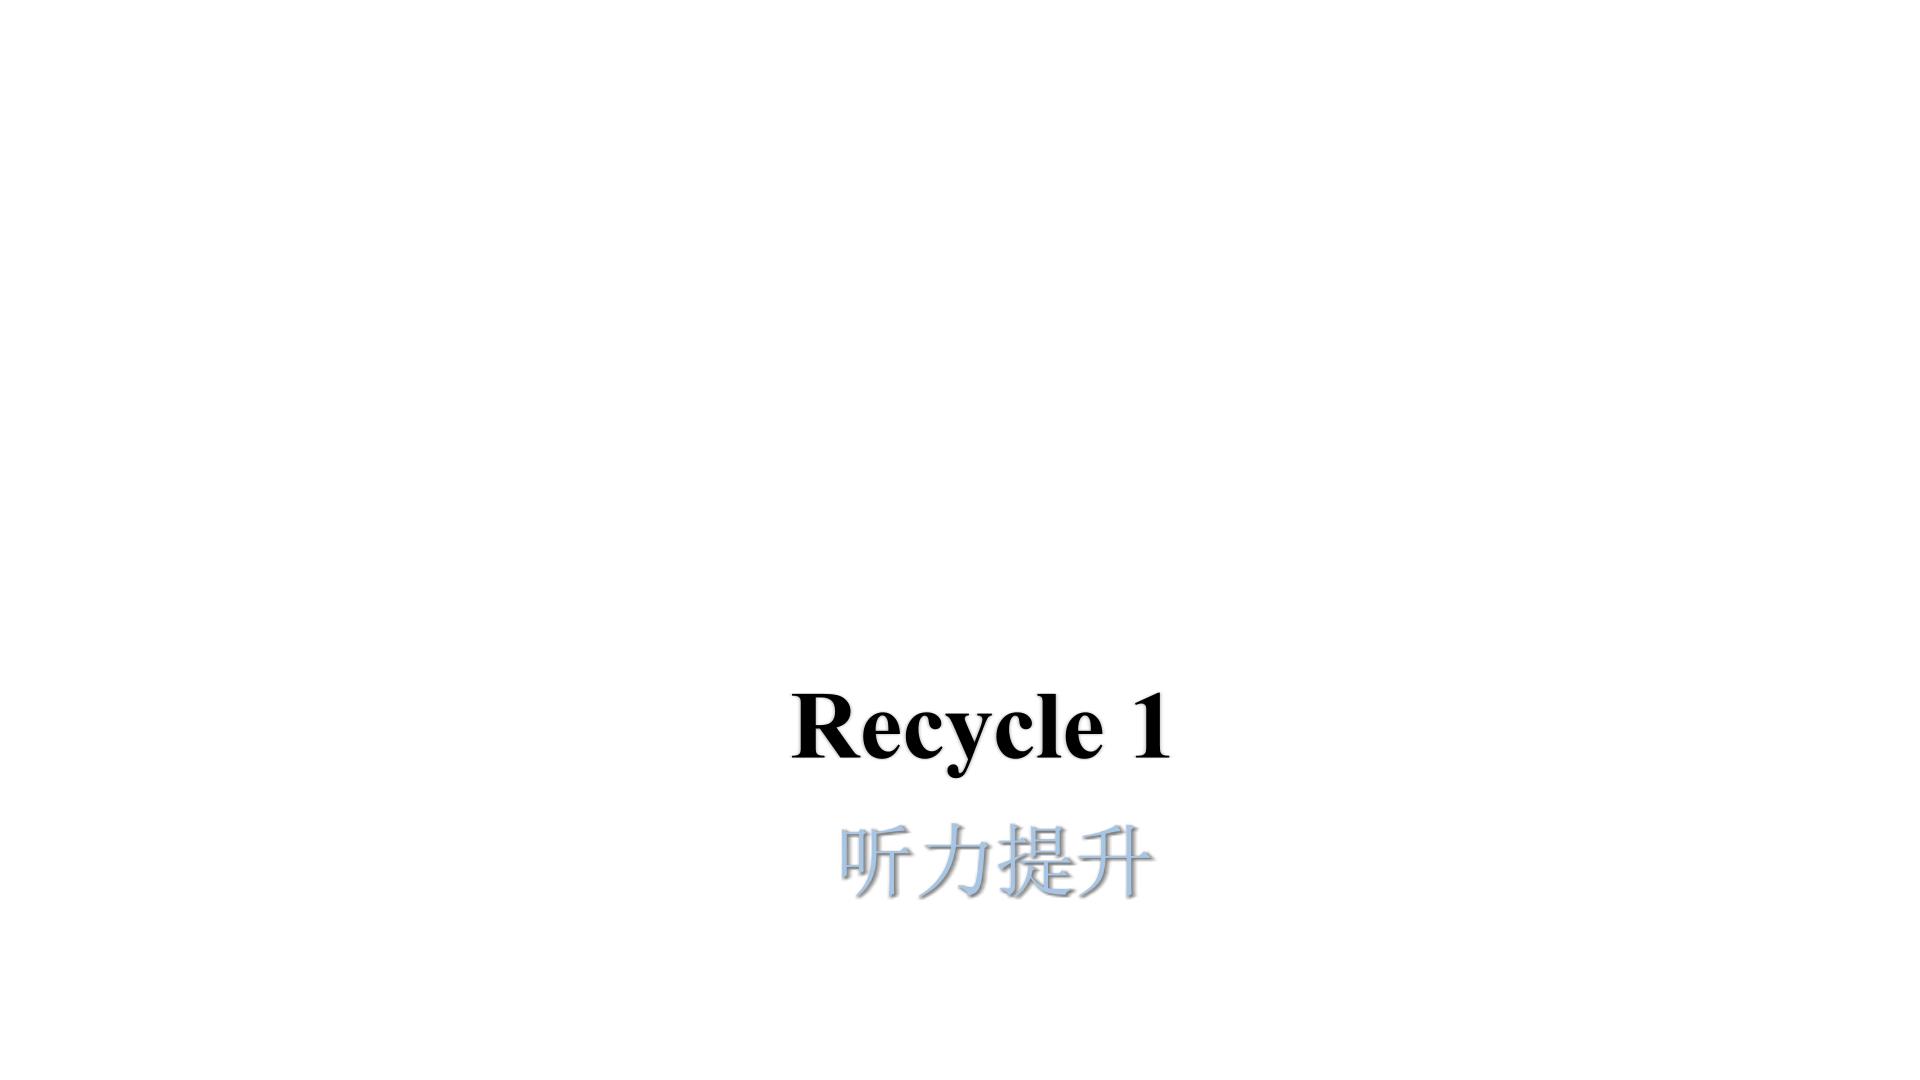 人教版 (PEP)Recycle 1教学ppt课件